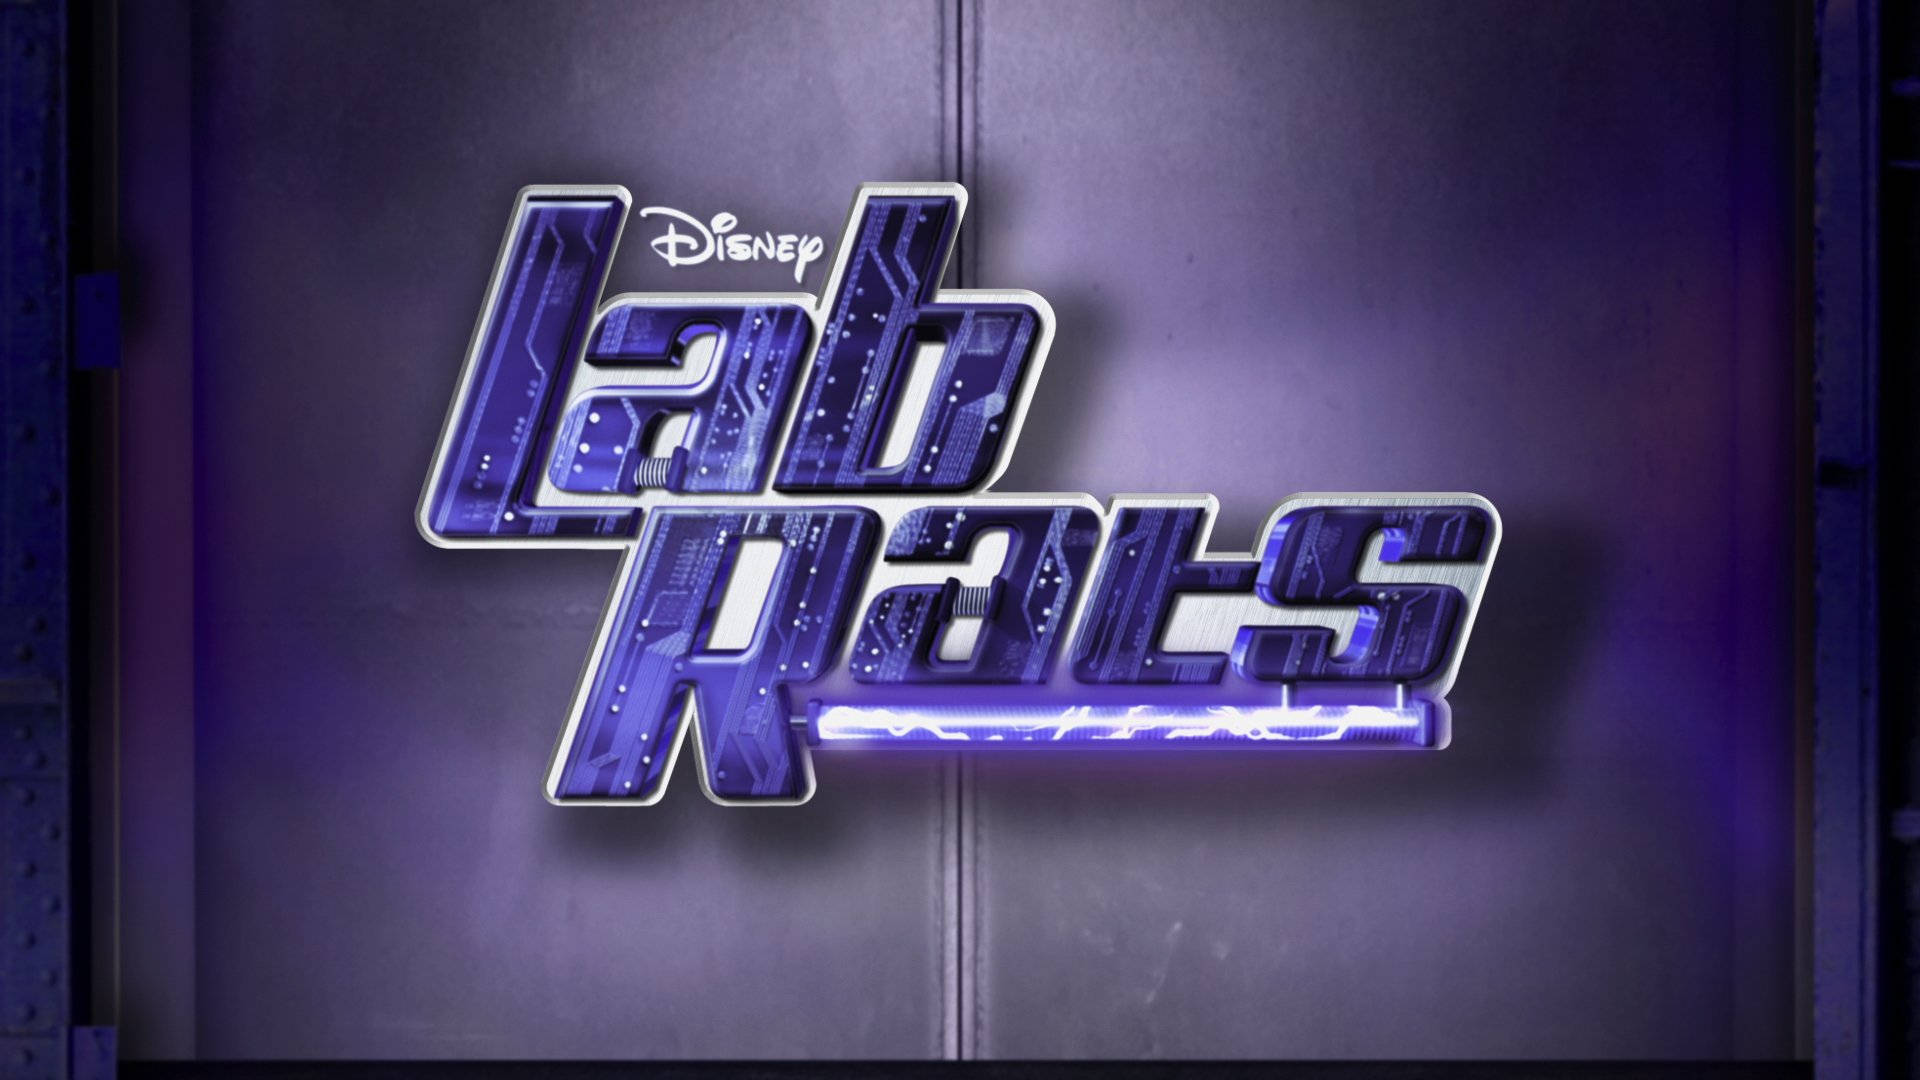 Disney Xd Lab Rats Background